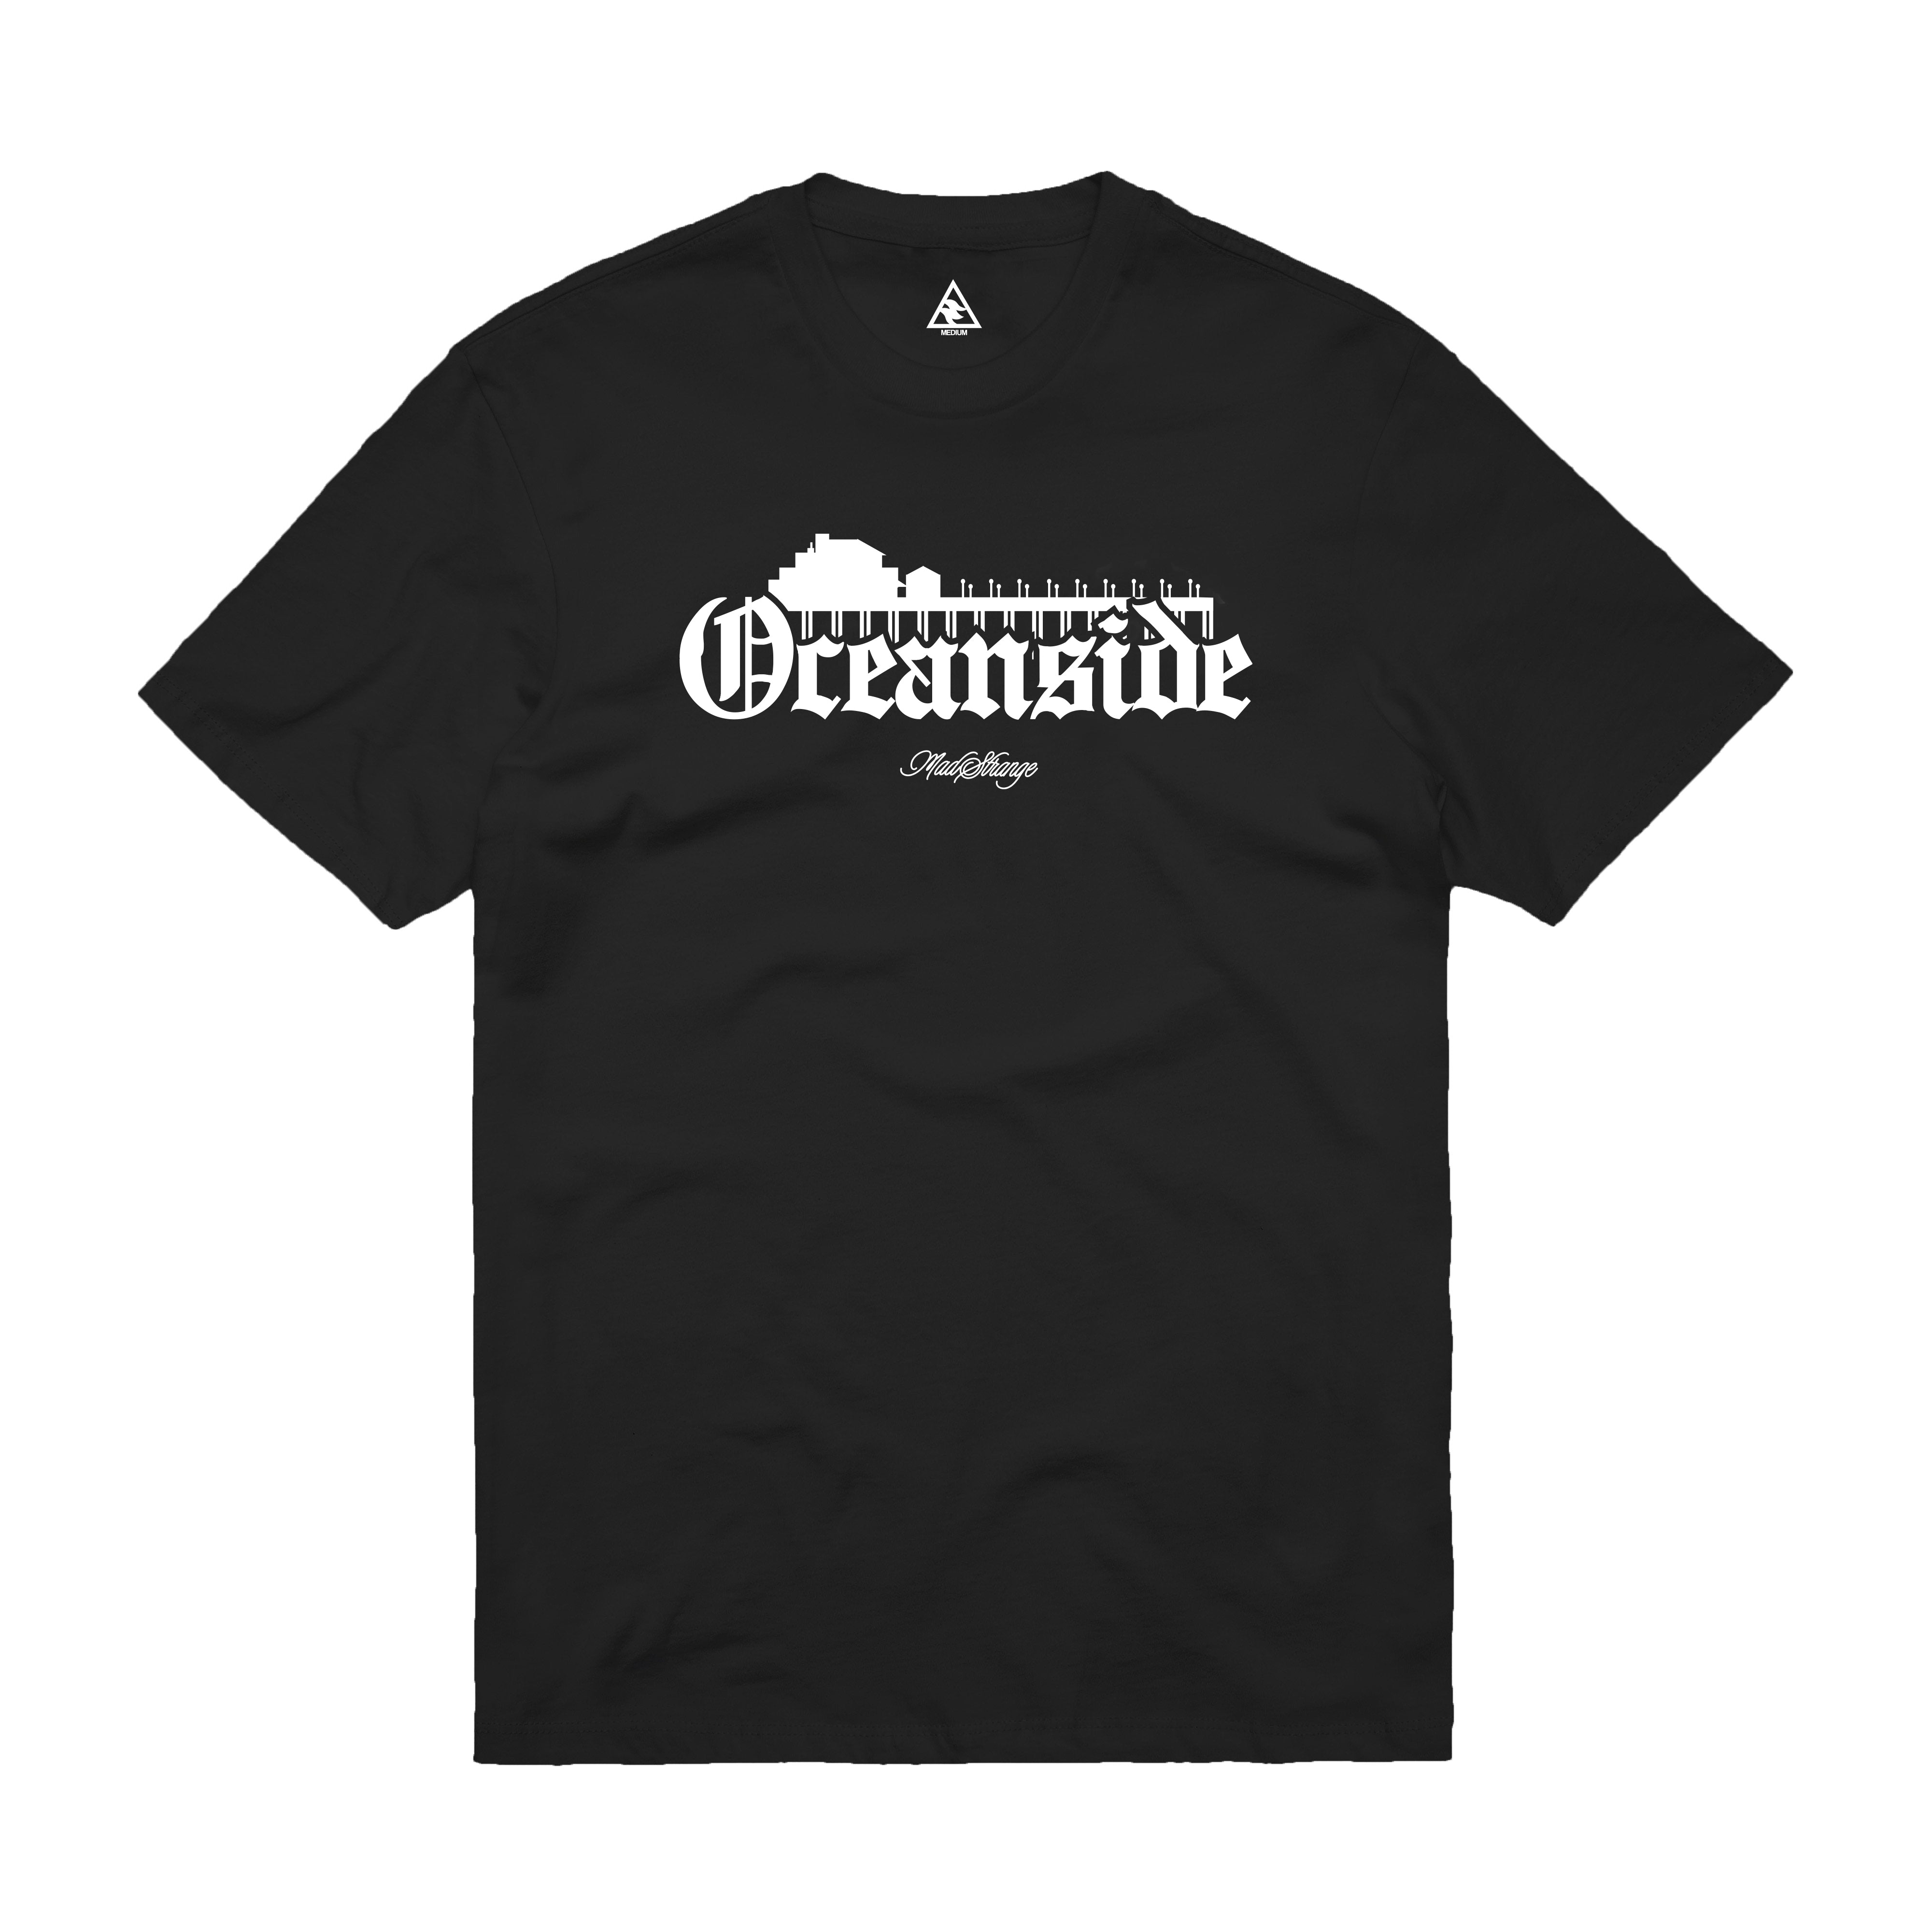 Oe Pier T-Shirt (Black)